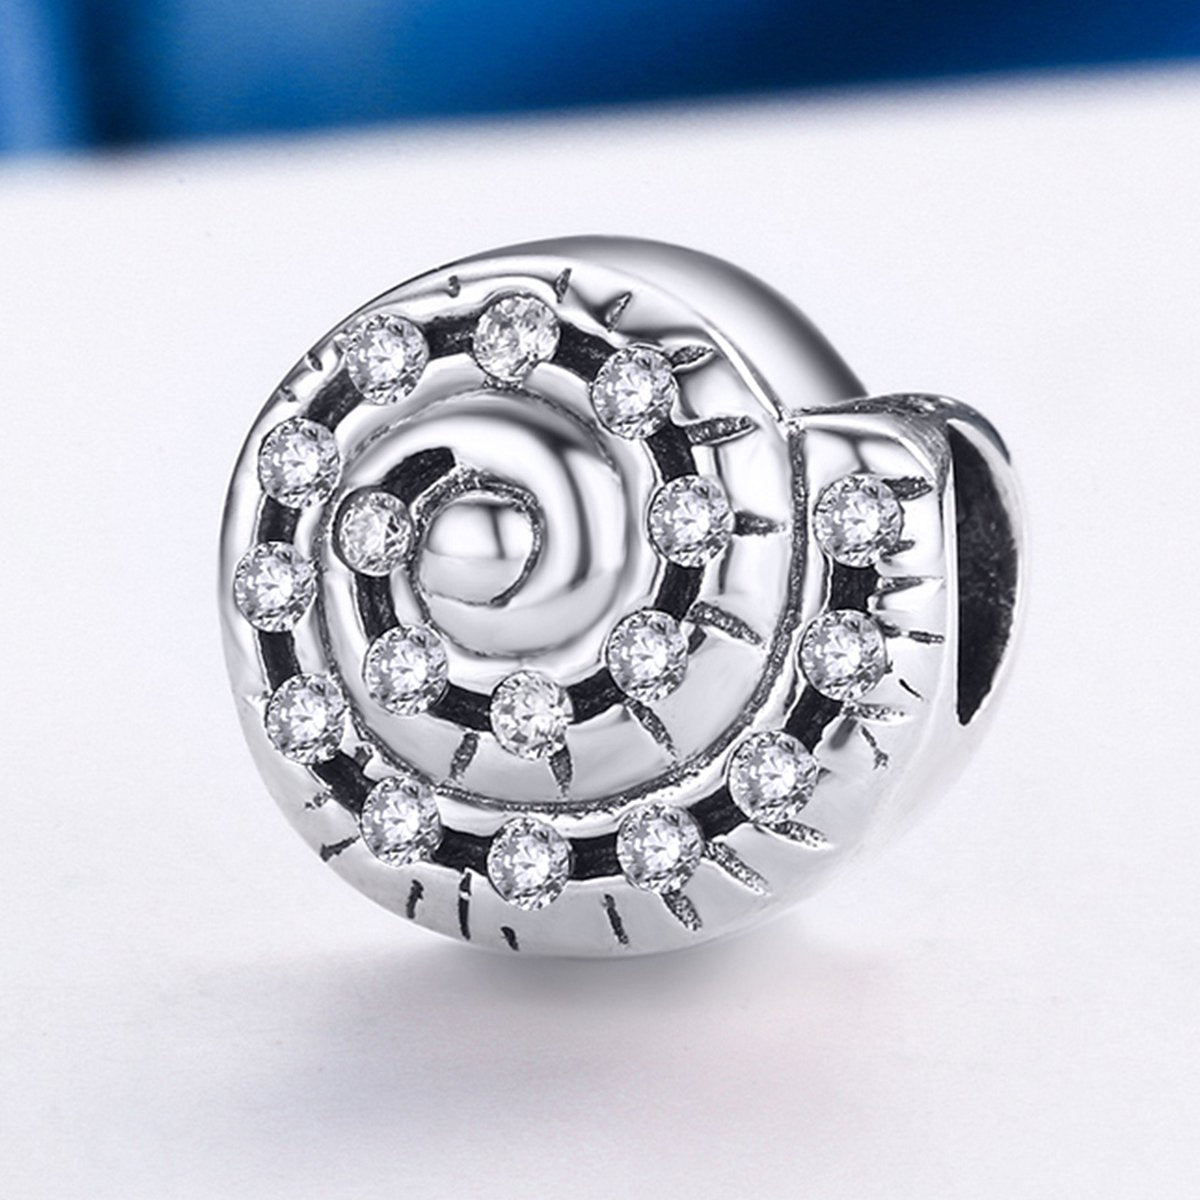 Sterling 925 silver charm the conch bead pendant fits Pandora charm and European charm bracelet Xaxe.com